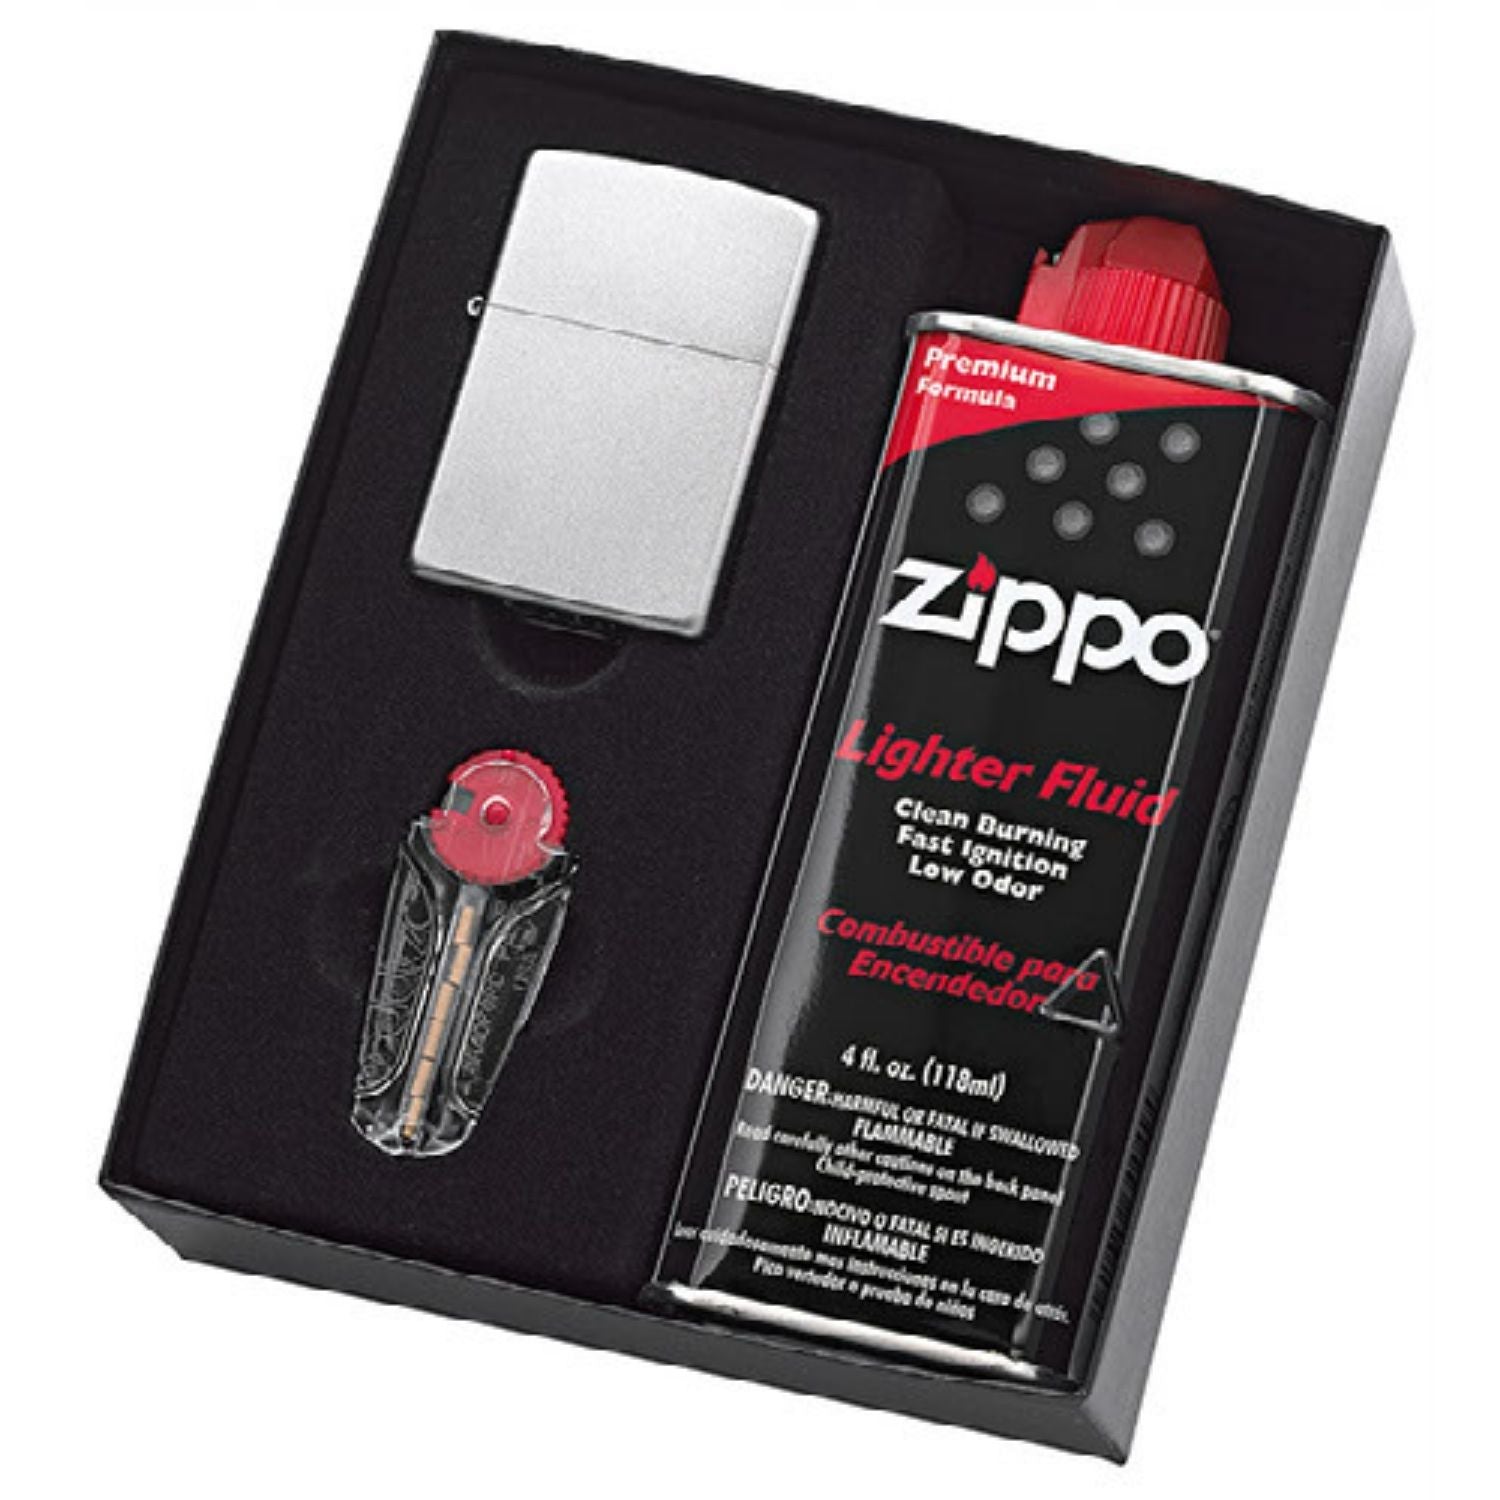 Zippo Fuel Fluid 1 Flint 1 Wick Value Pack Combo Set 4 oz